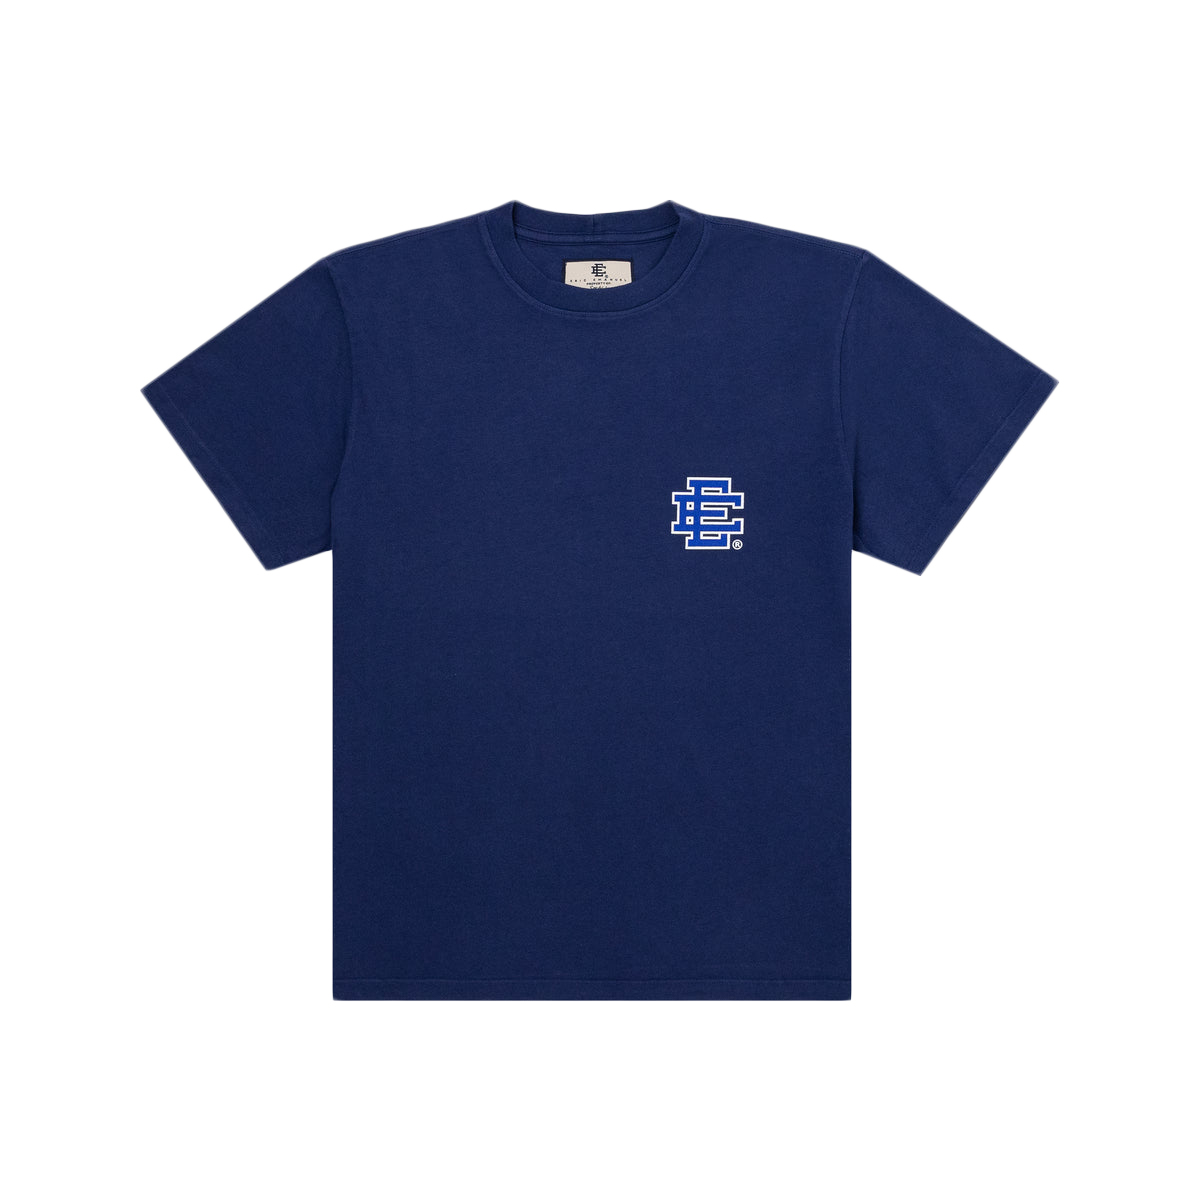 Eric Emanuel EE Basic T-shirt Cobalt Blue メンズ - SS22 - JP